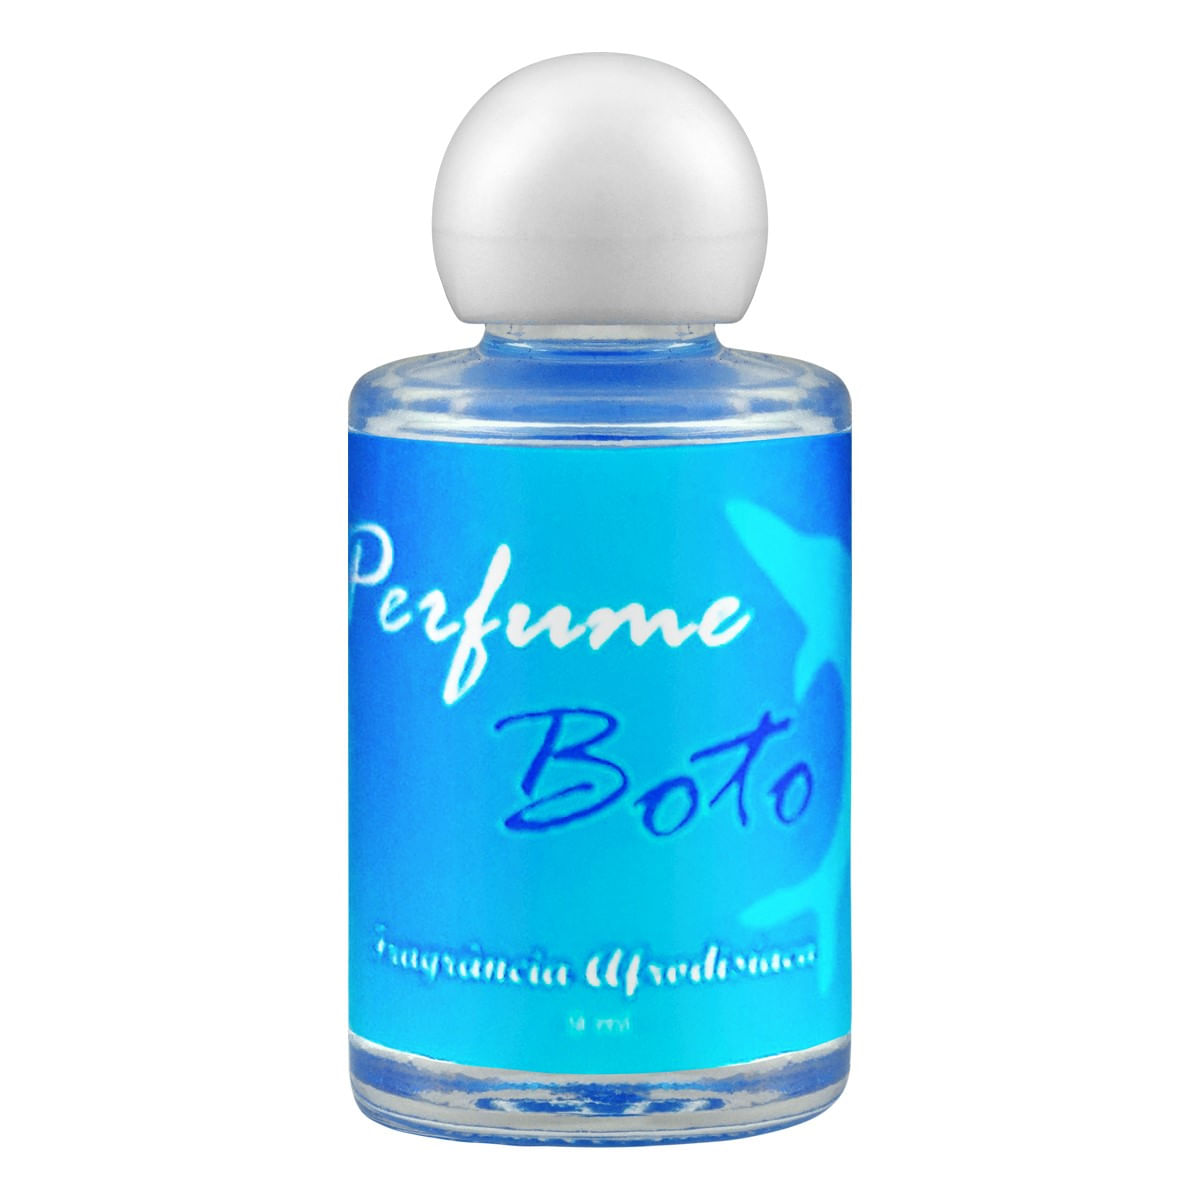 Perfume Boto Fragrância Afrodisíaca Masculina 8ml Focko Sex